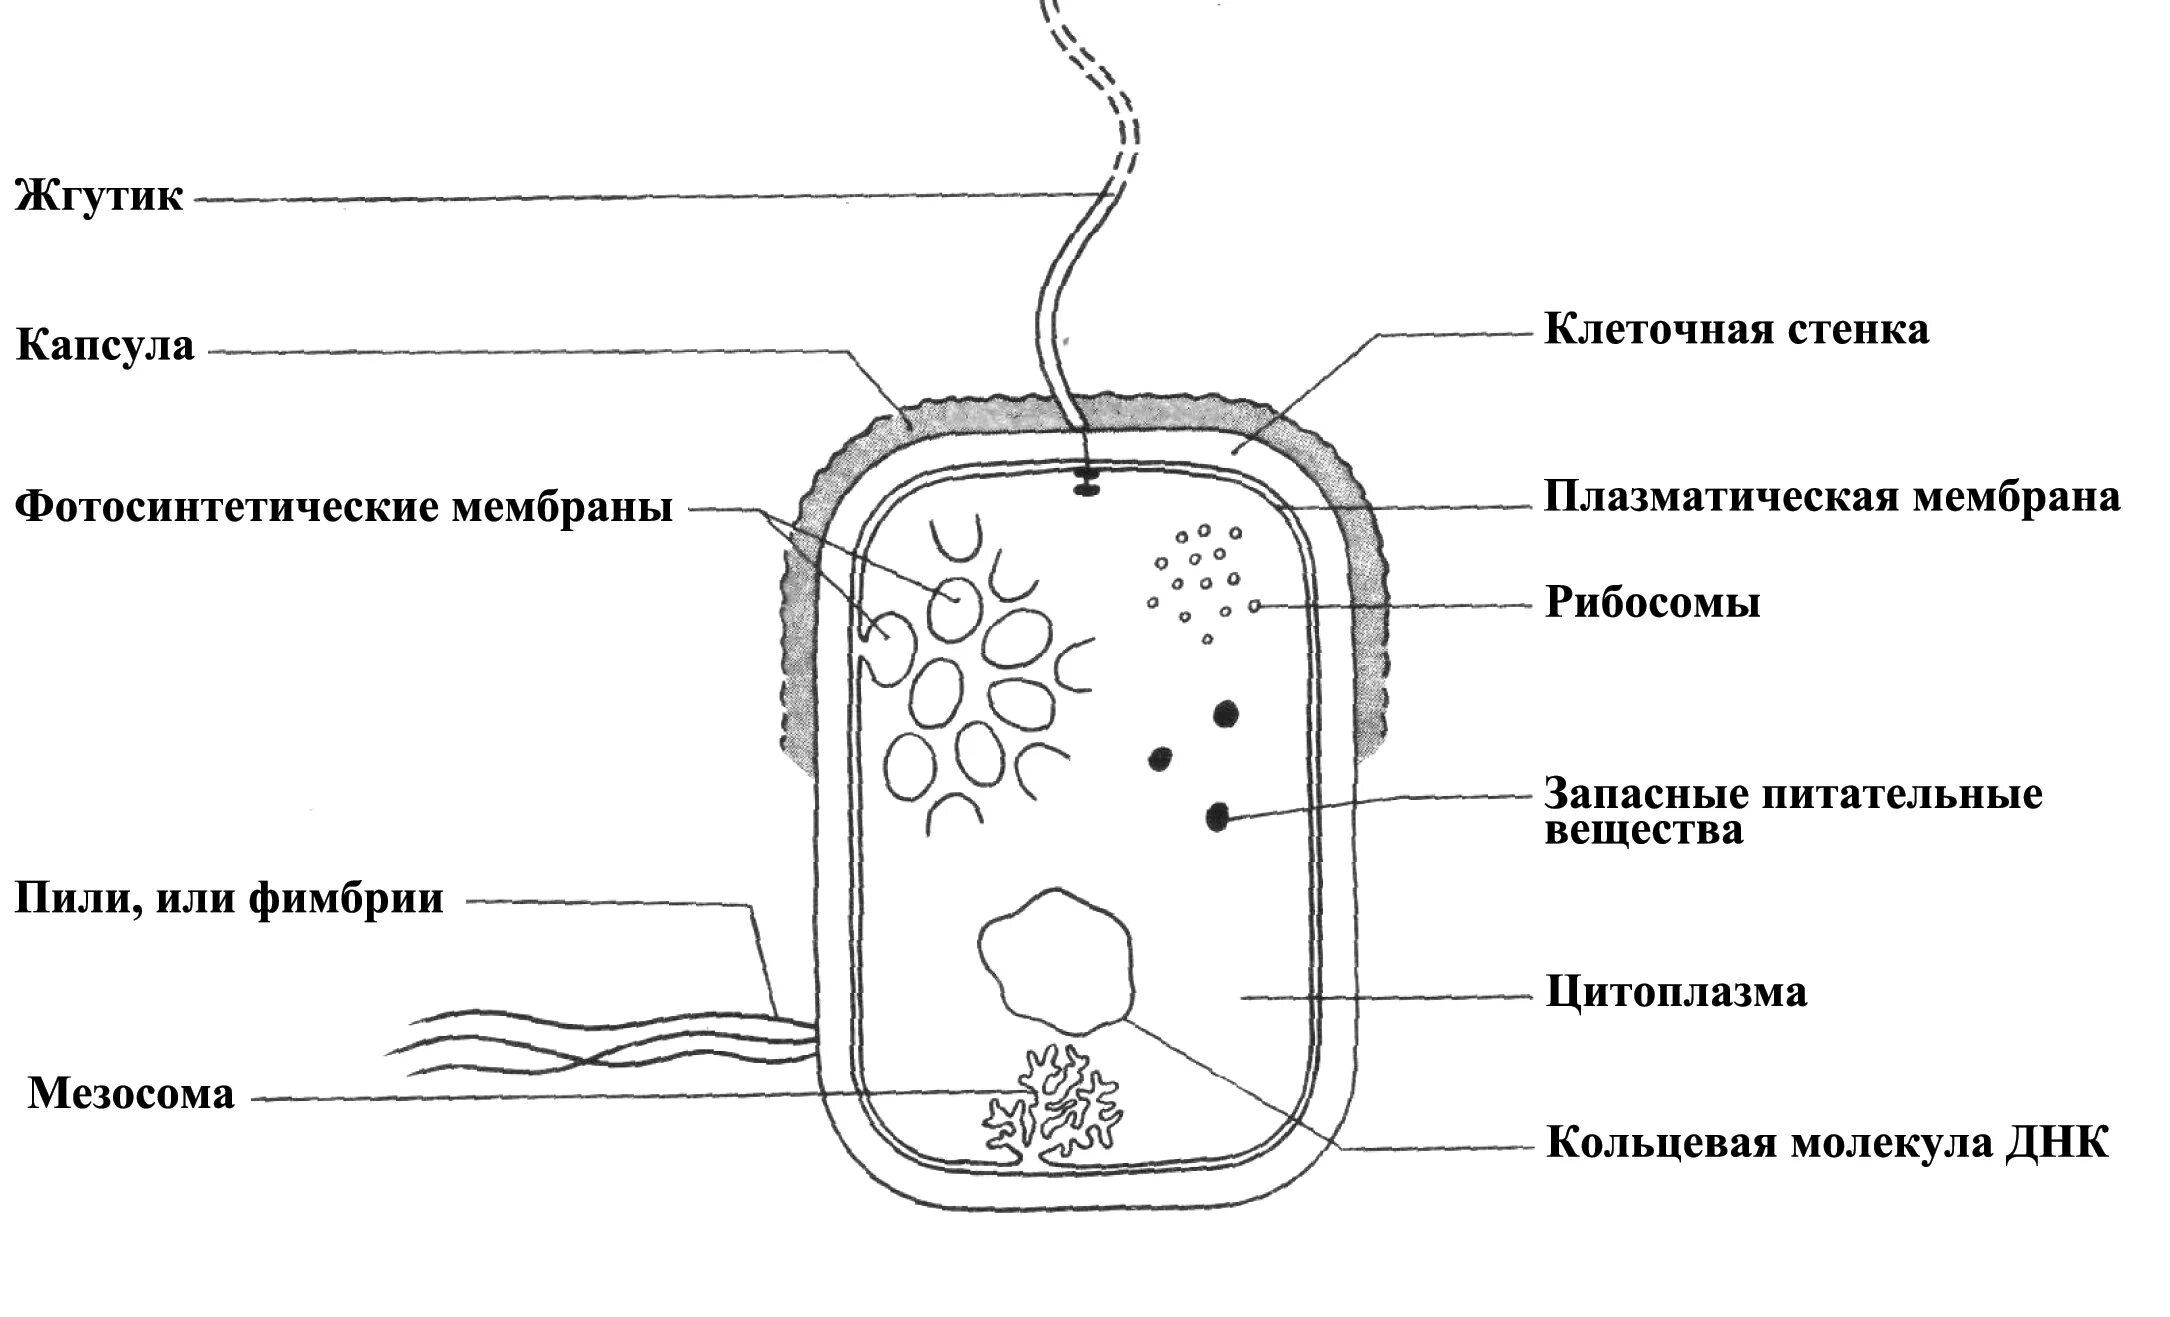 Бактерия прокариот строение. Строение прокариотической клетки бактерии. Строение прокариотической клетки ЕГЭ. Схема строения клетки прокариот. Строение клетки прокариот бактерии.